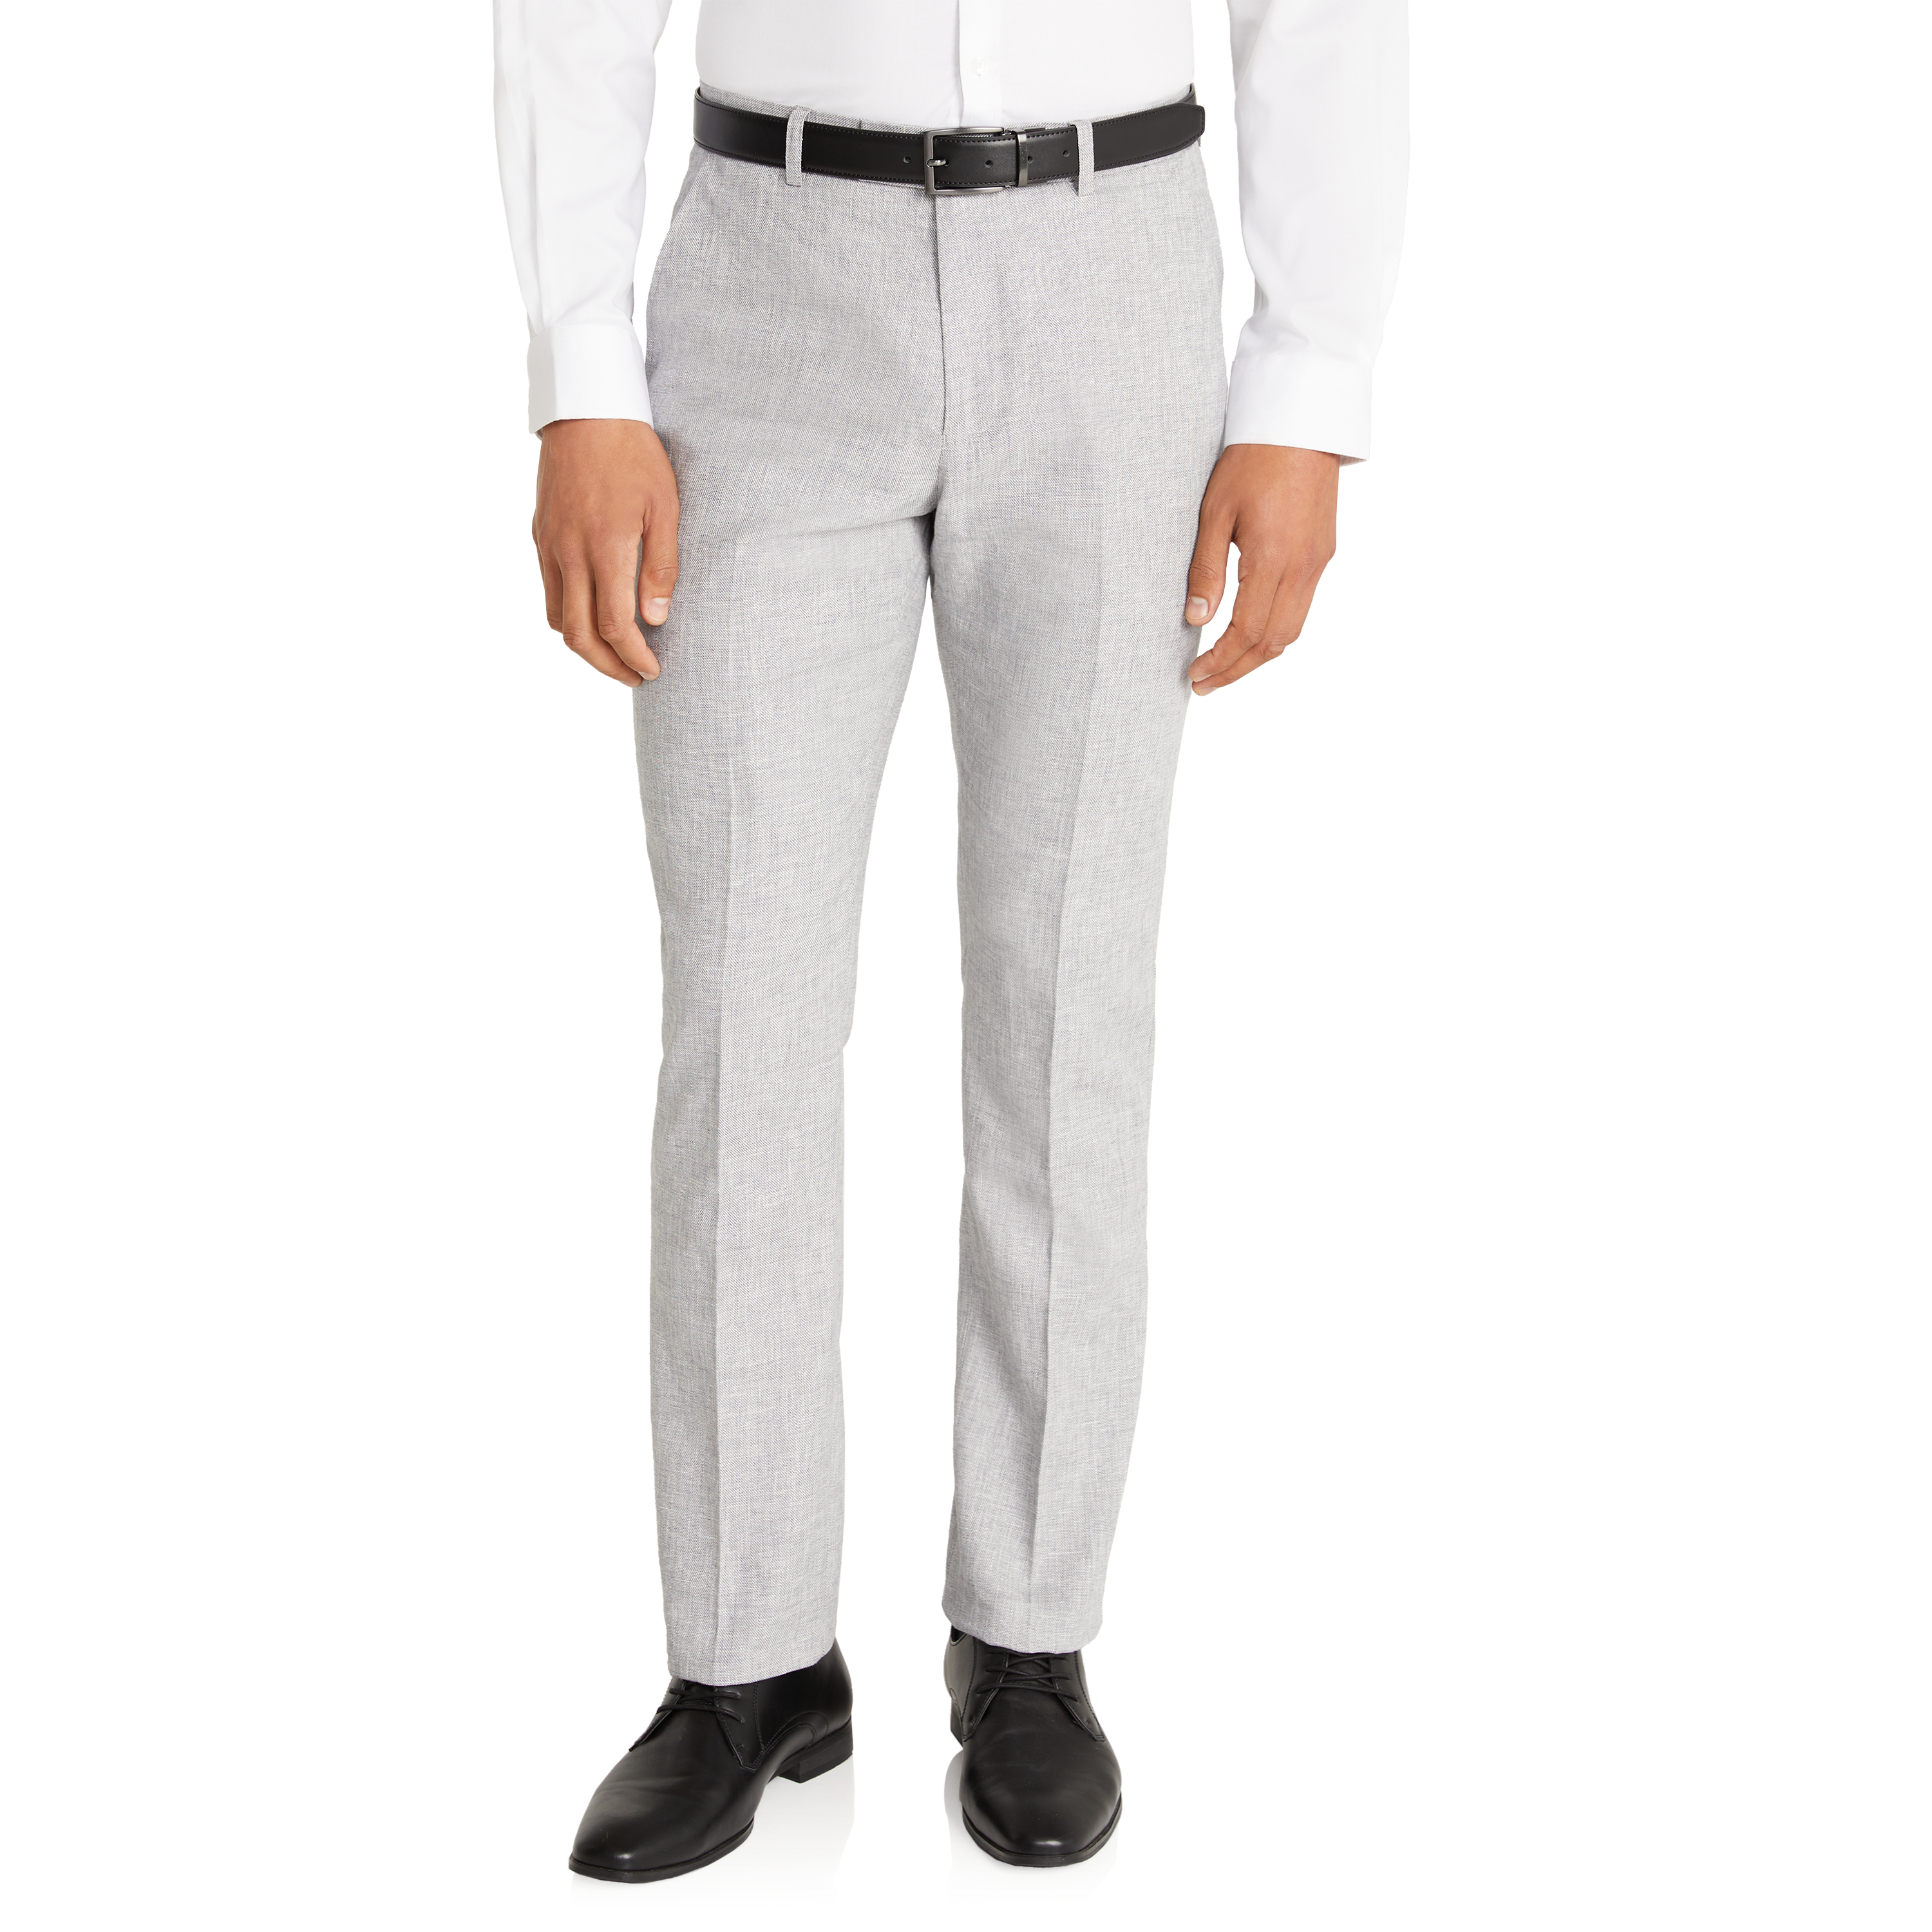 Buy PlaidPlain Mens Stretch Dress Pants Slim Fit Skinny Suit Pants Black  Red Stripes 27W x 28L at Amazonin